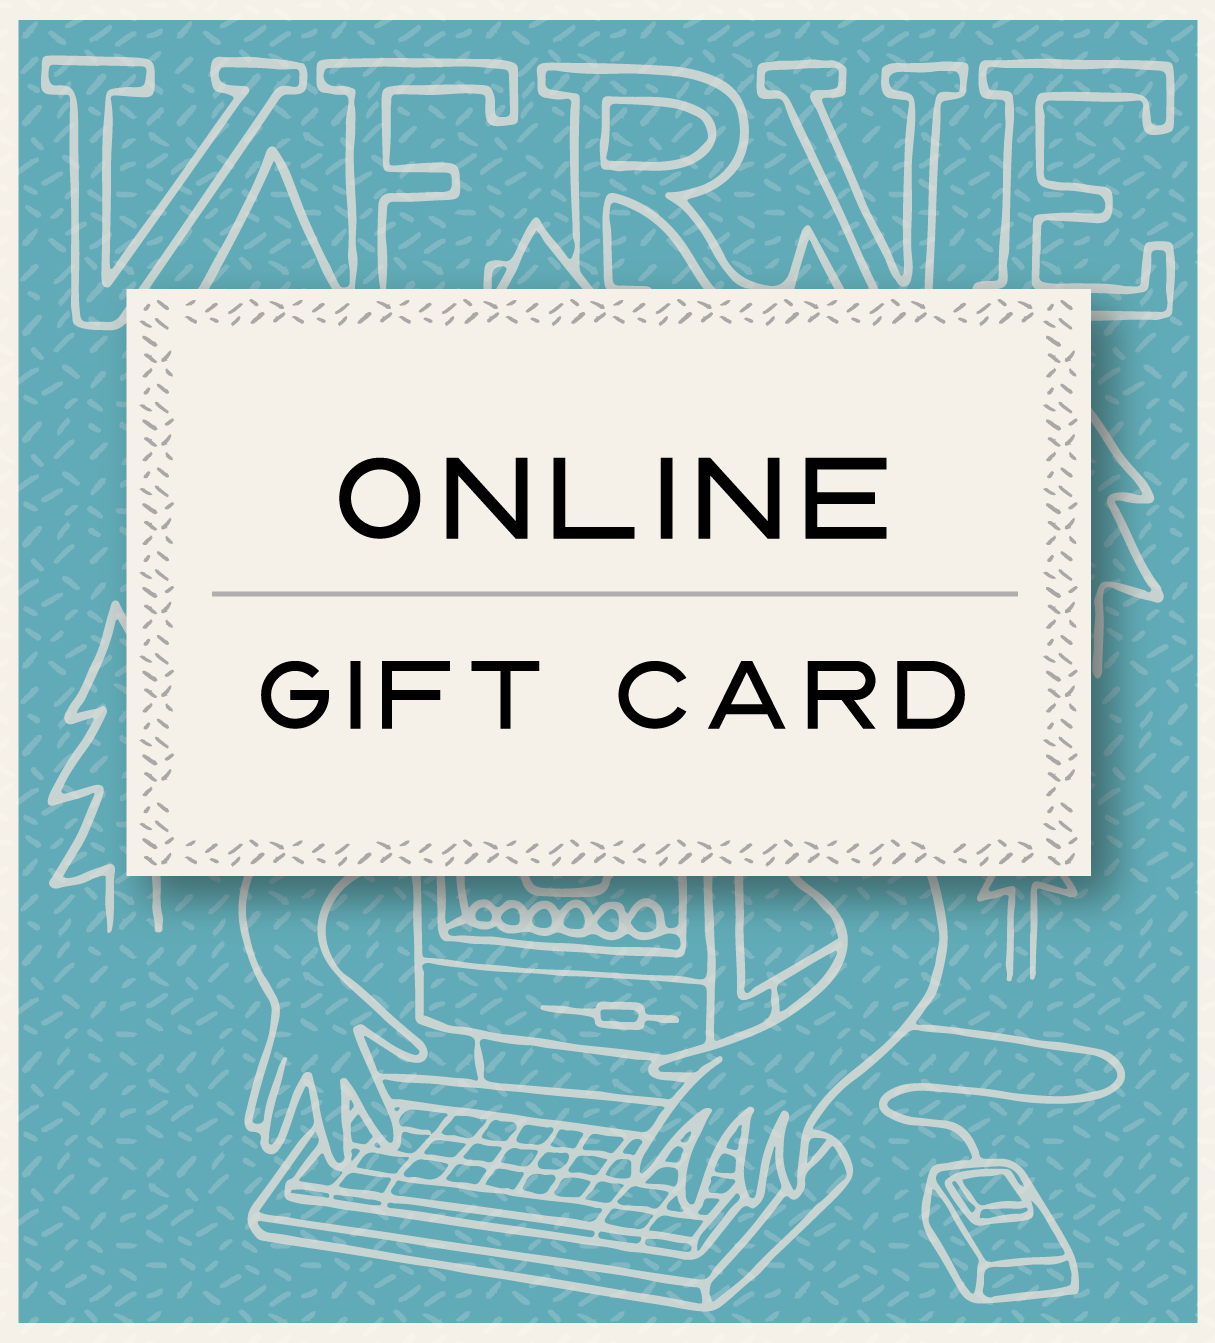 Order a Digital e-Gift Card